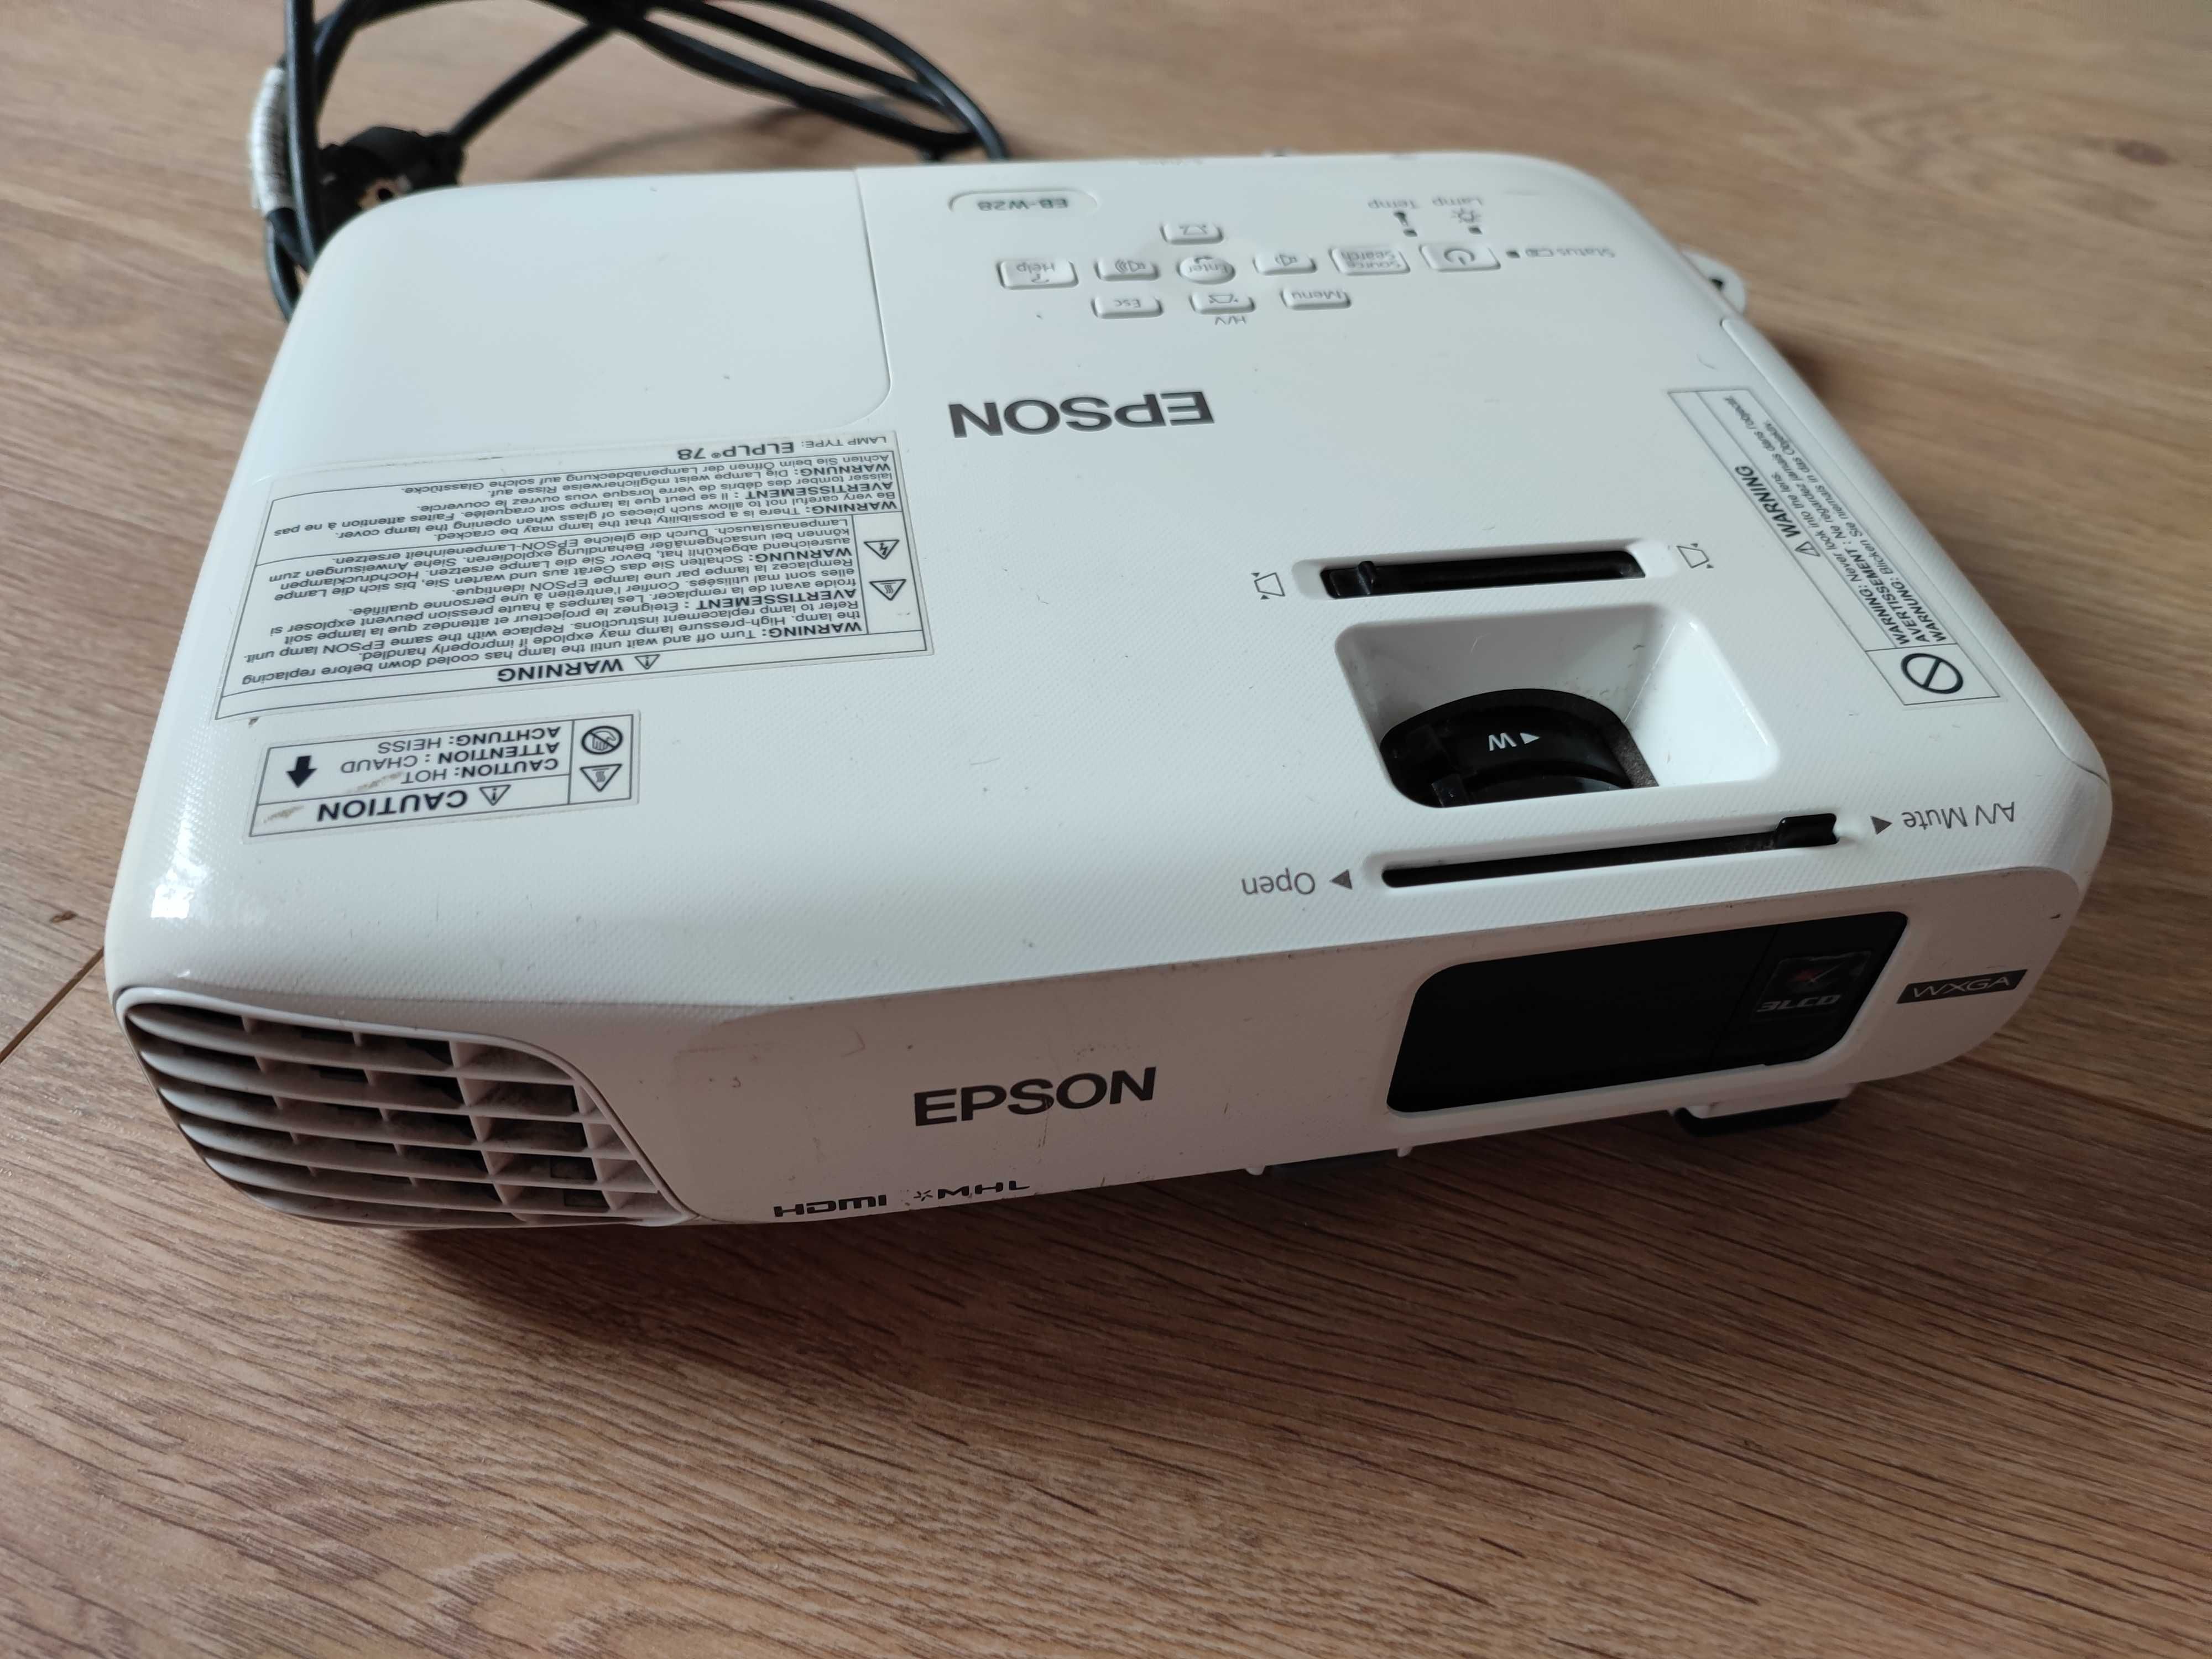 Projektor Epson EB-W28